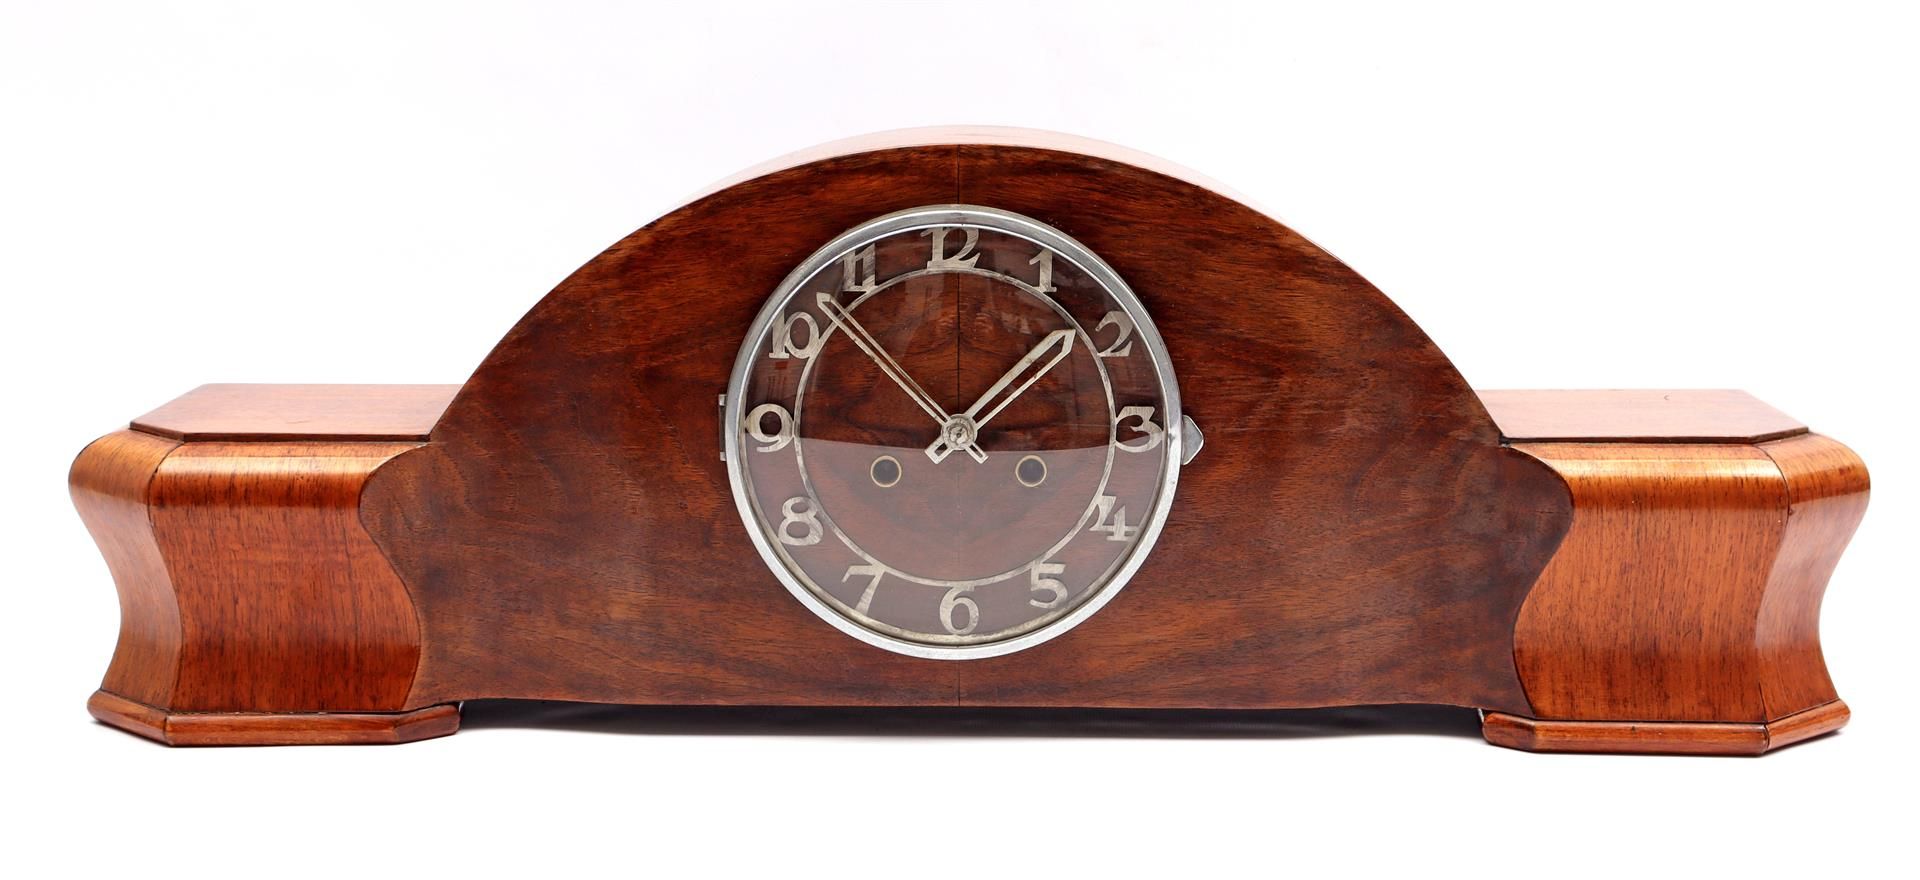 Chimney mantel clock